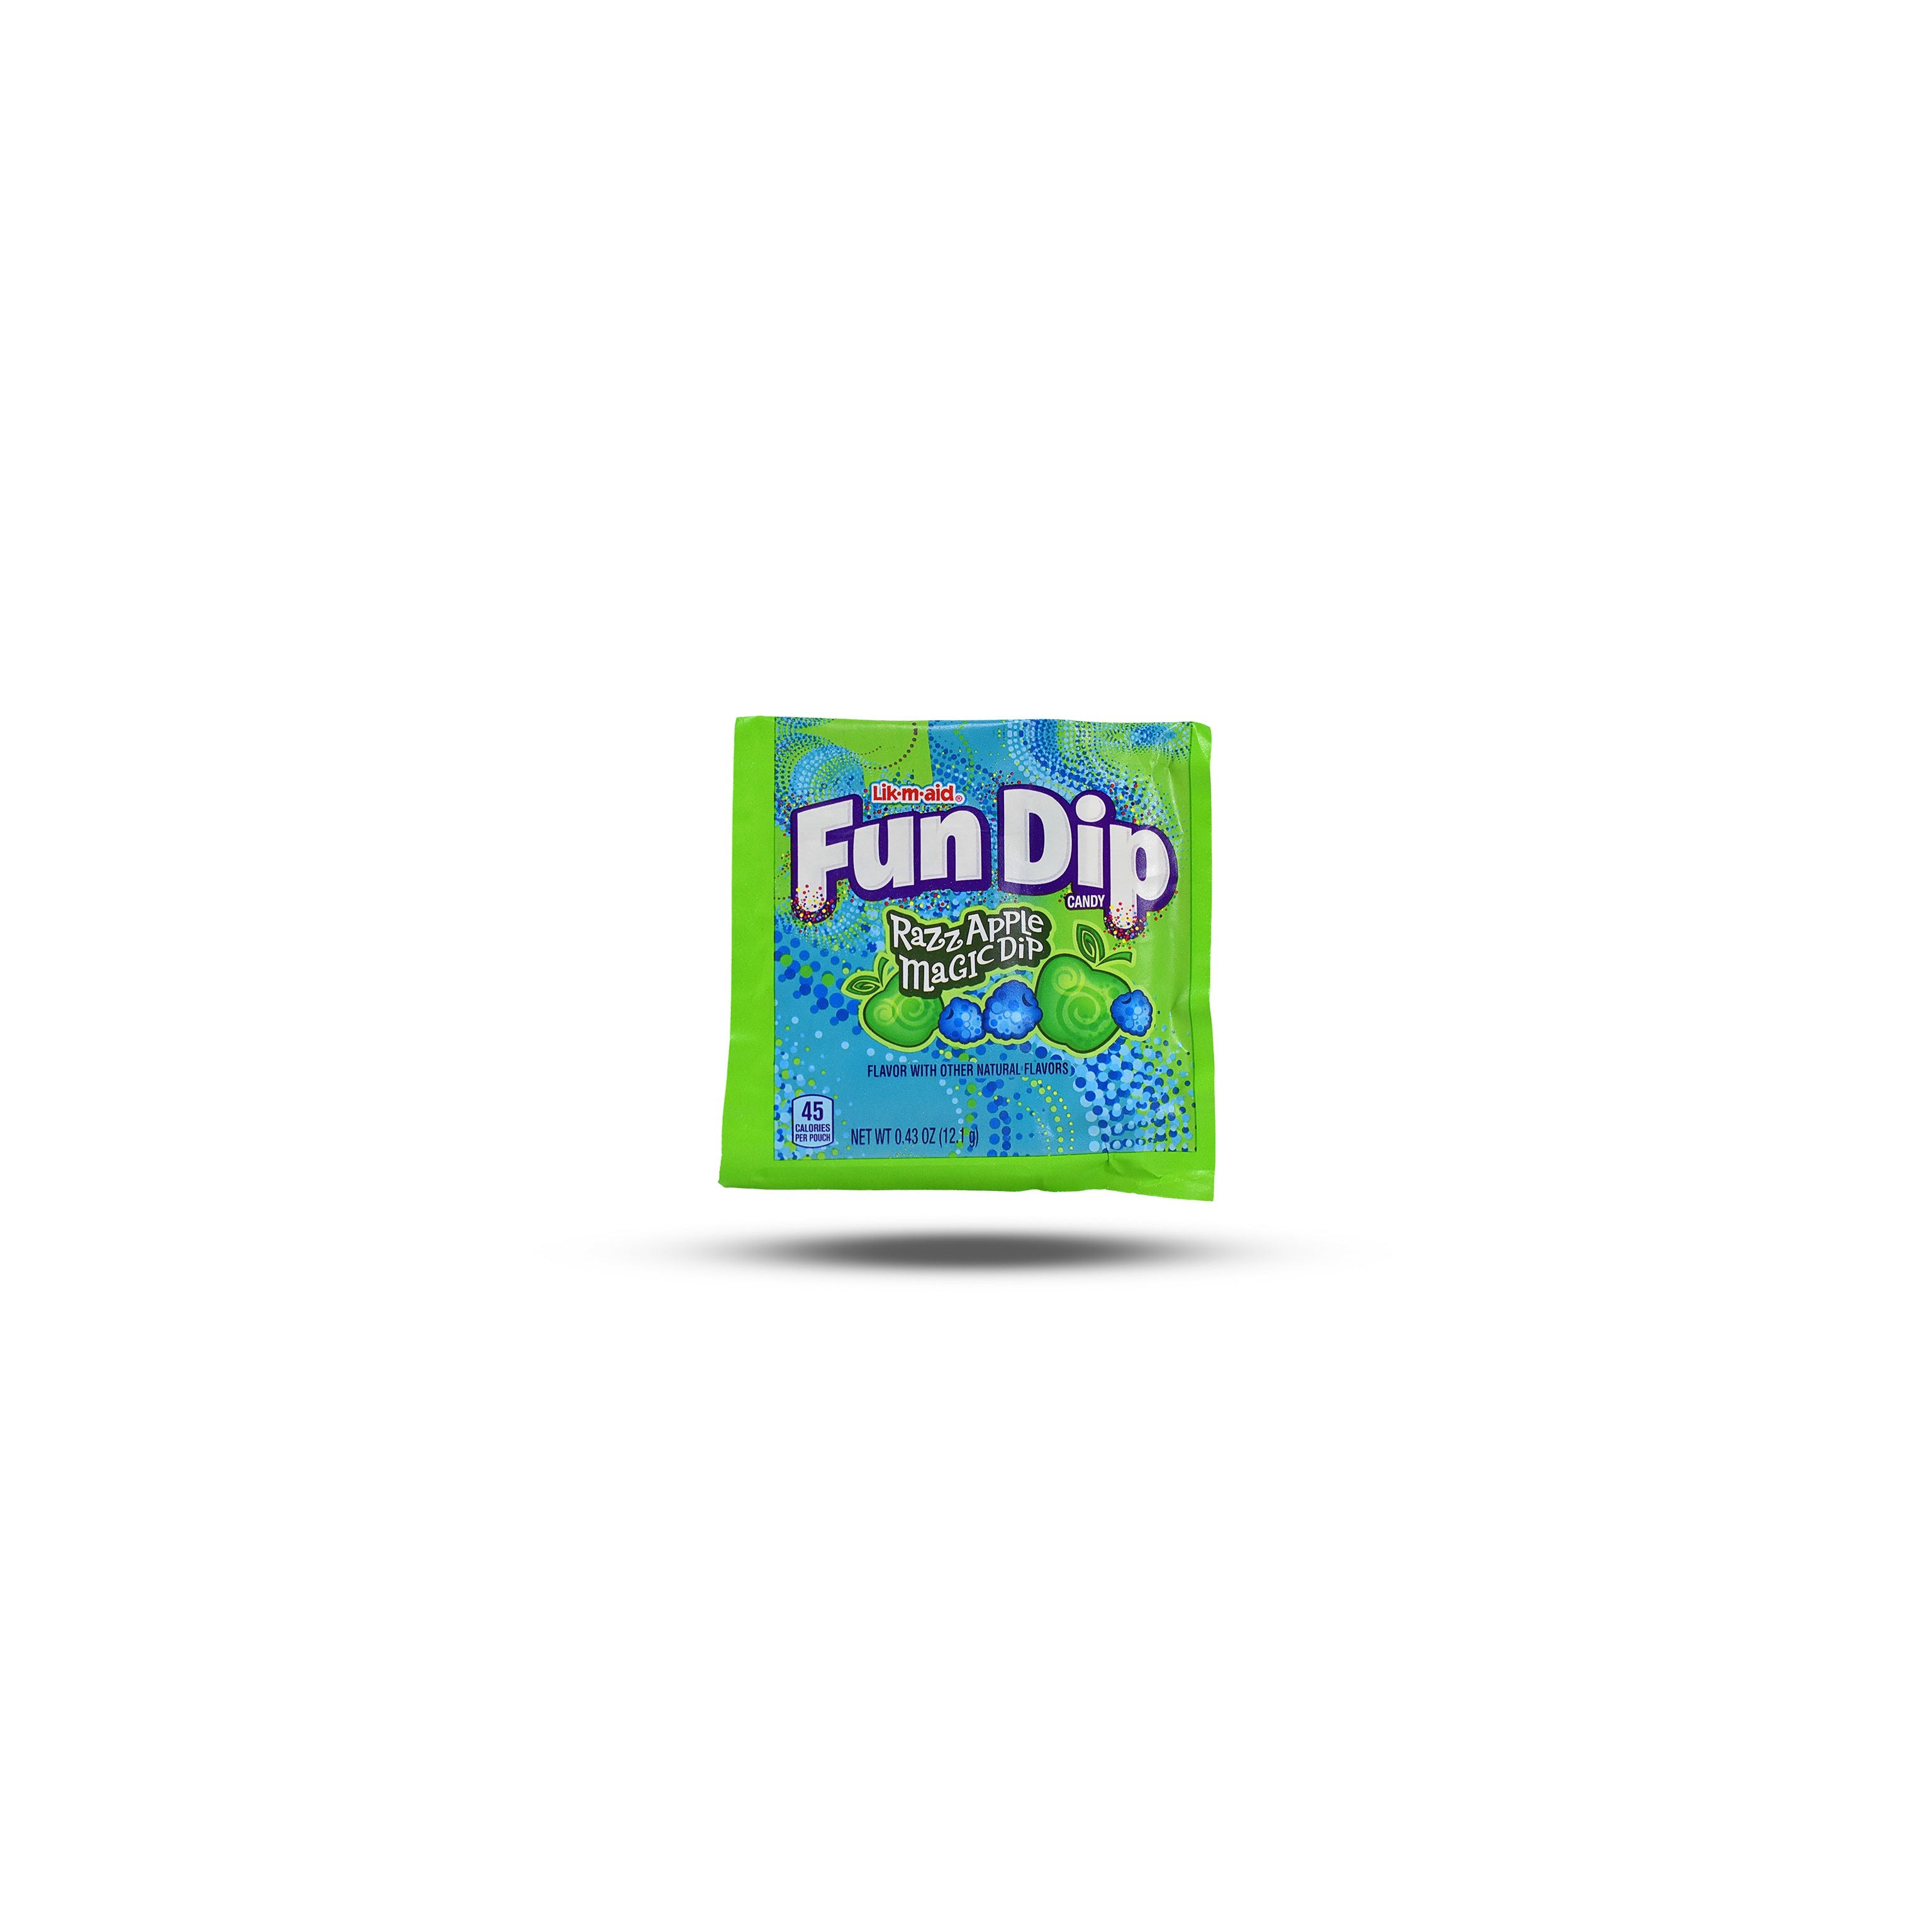 Lik m aid - Fund Dip Candy Razz Apple magic Dip 12,1g-Ferrara Candy Company-SNACK SHOP AUSTRIA